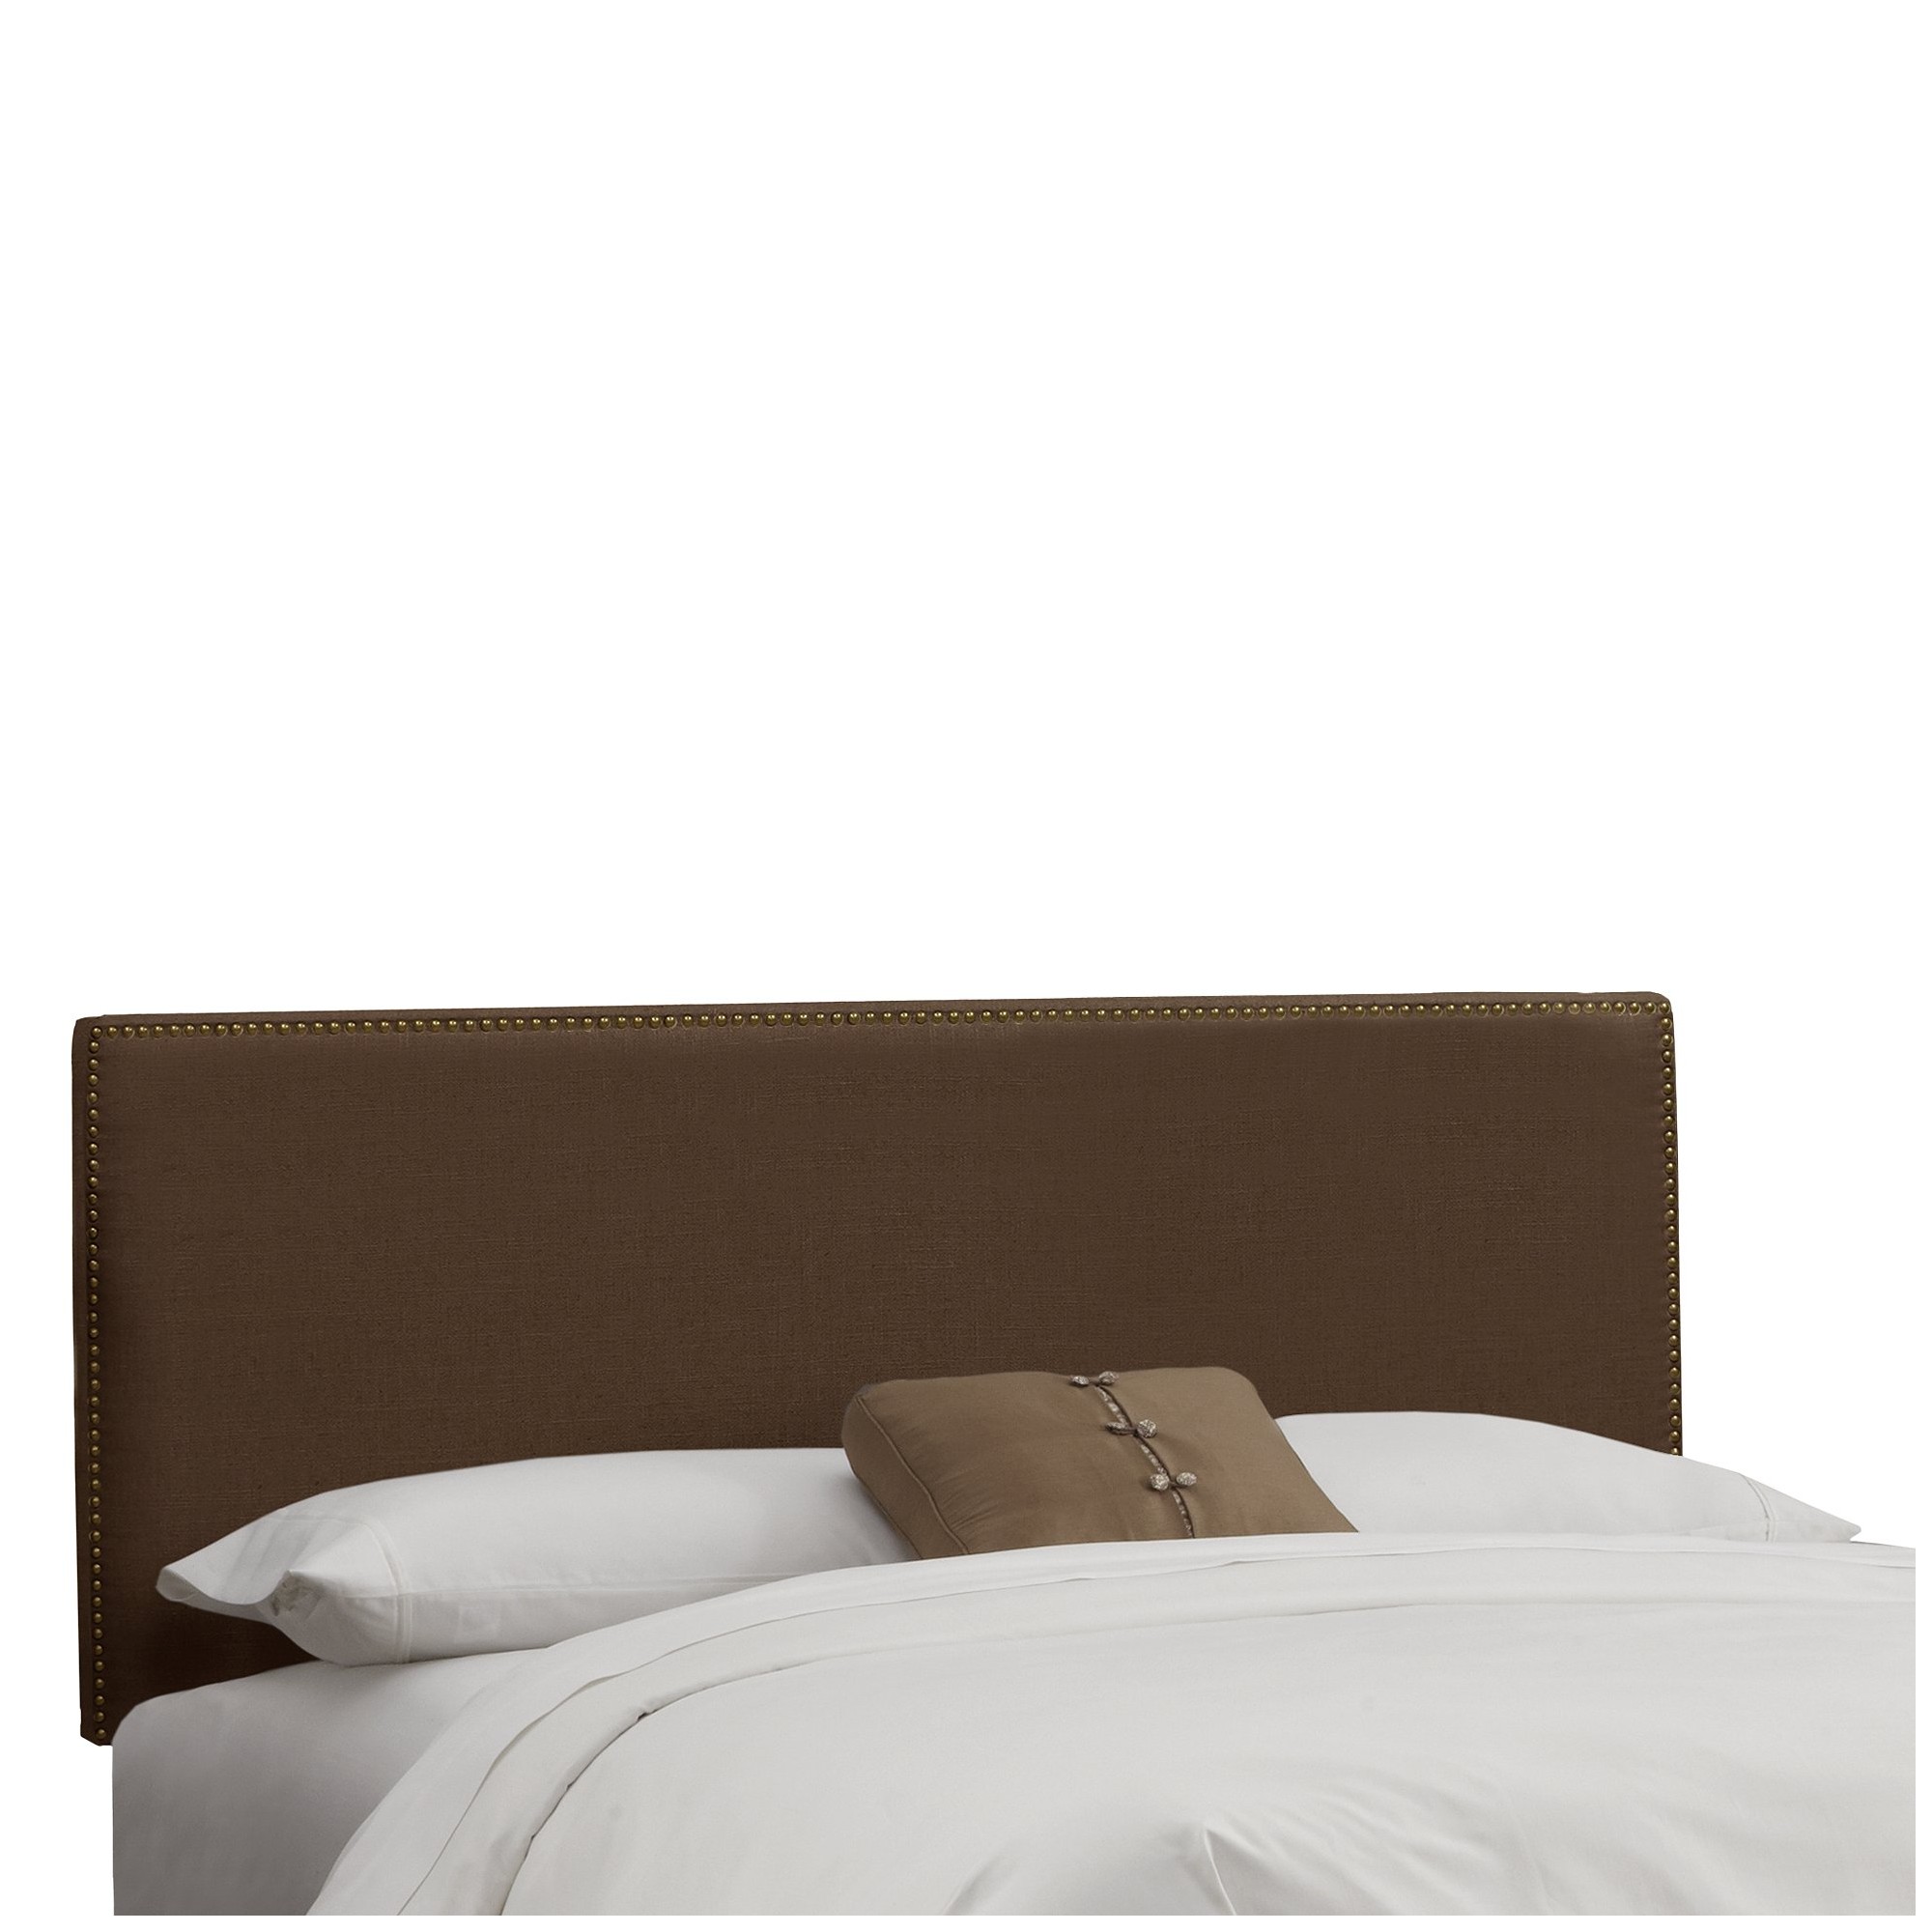 Twin Arcadia Nailbutton Headboard Linen Chocolate with Brass Nail Buttons - Skyline Furniture, Linen Brown